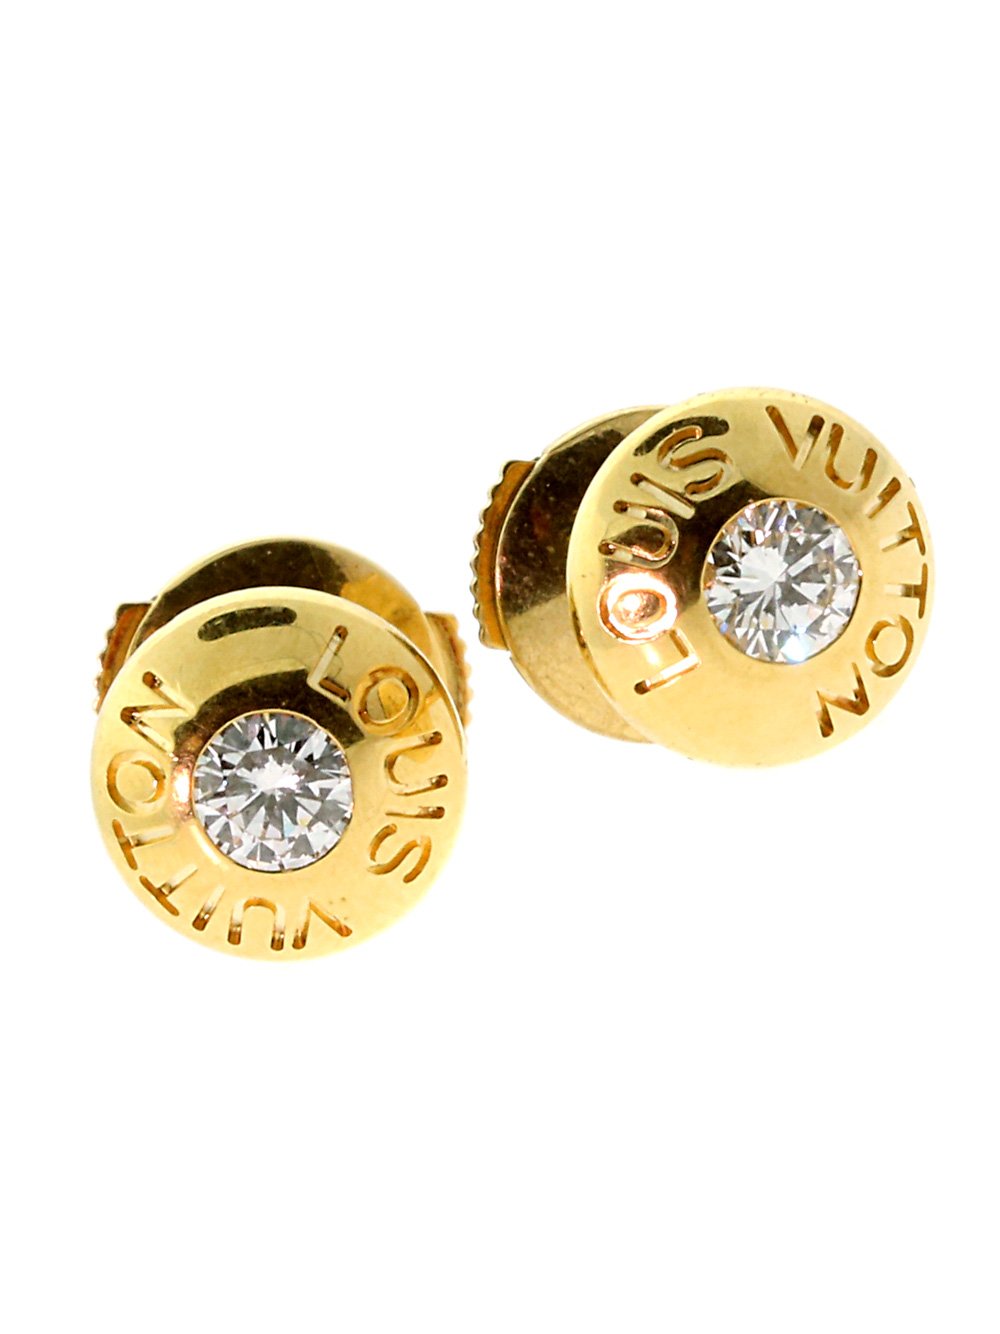 diamond louis vuitton earrings price